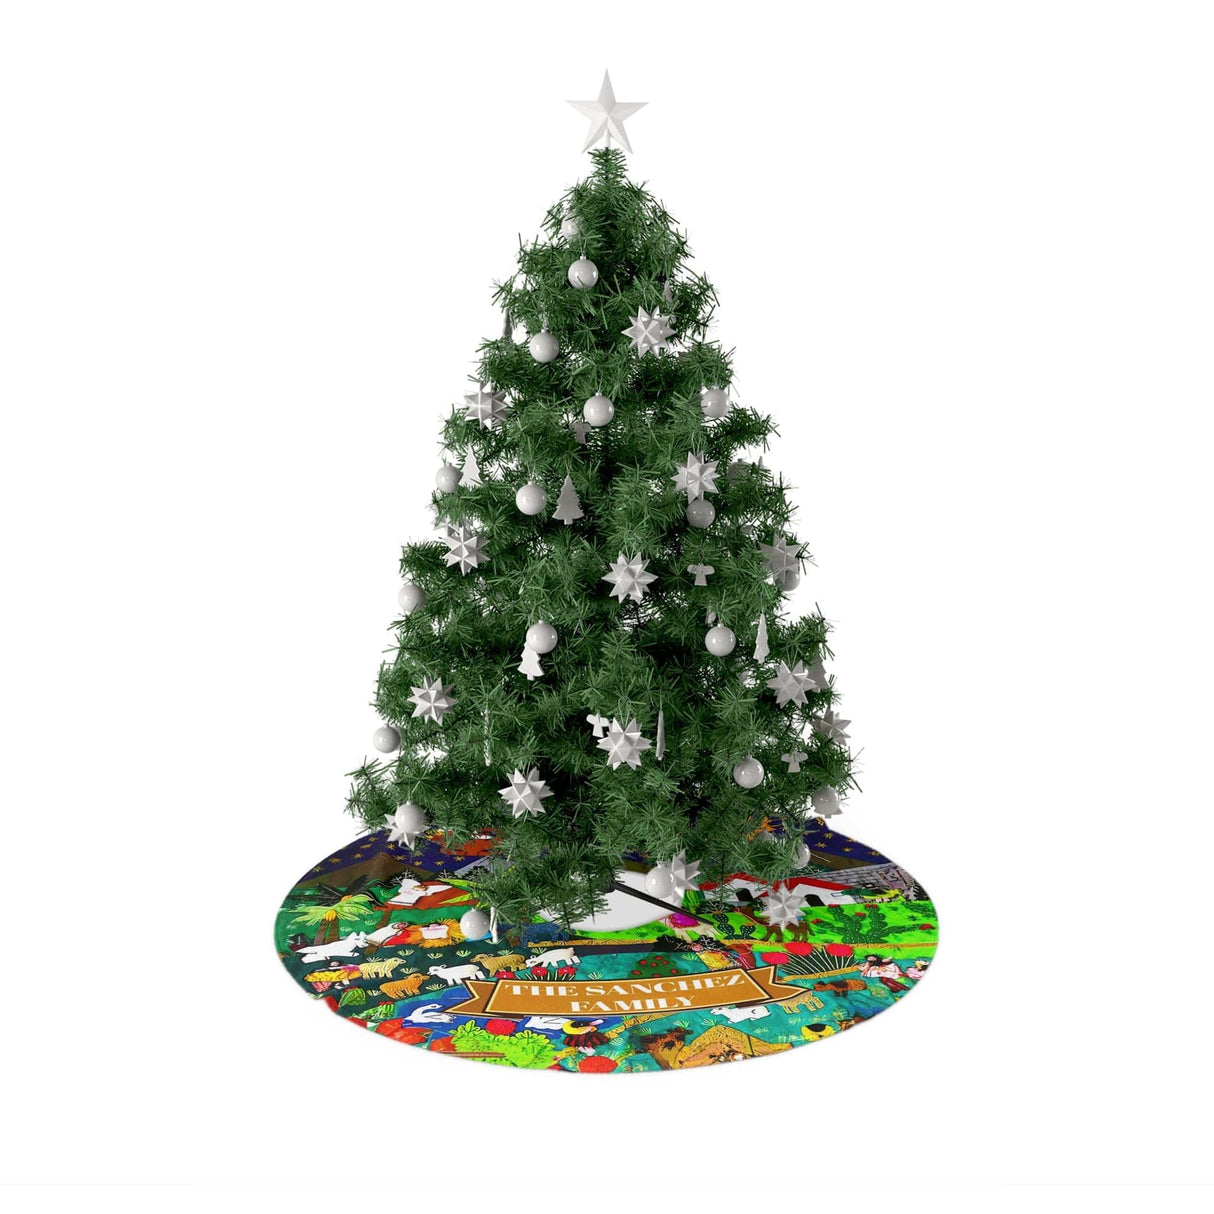 Christmas Tree Skirts Custom Nativity Jeus Was Born Christmas Tree Skirt | Personalized Christmas Tree Skirt - Merry Xmas Holiday Home Decor